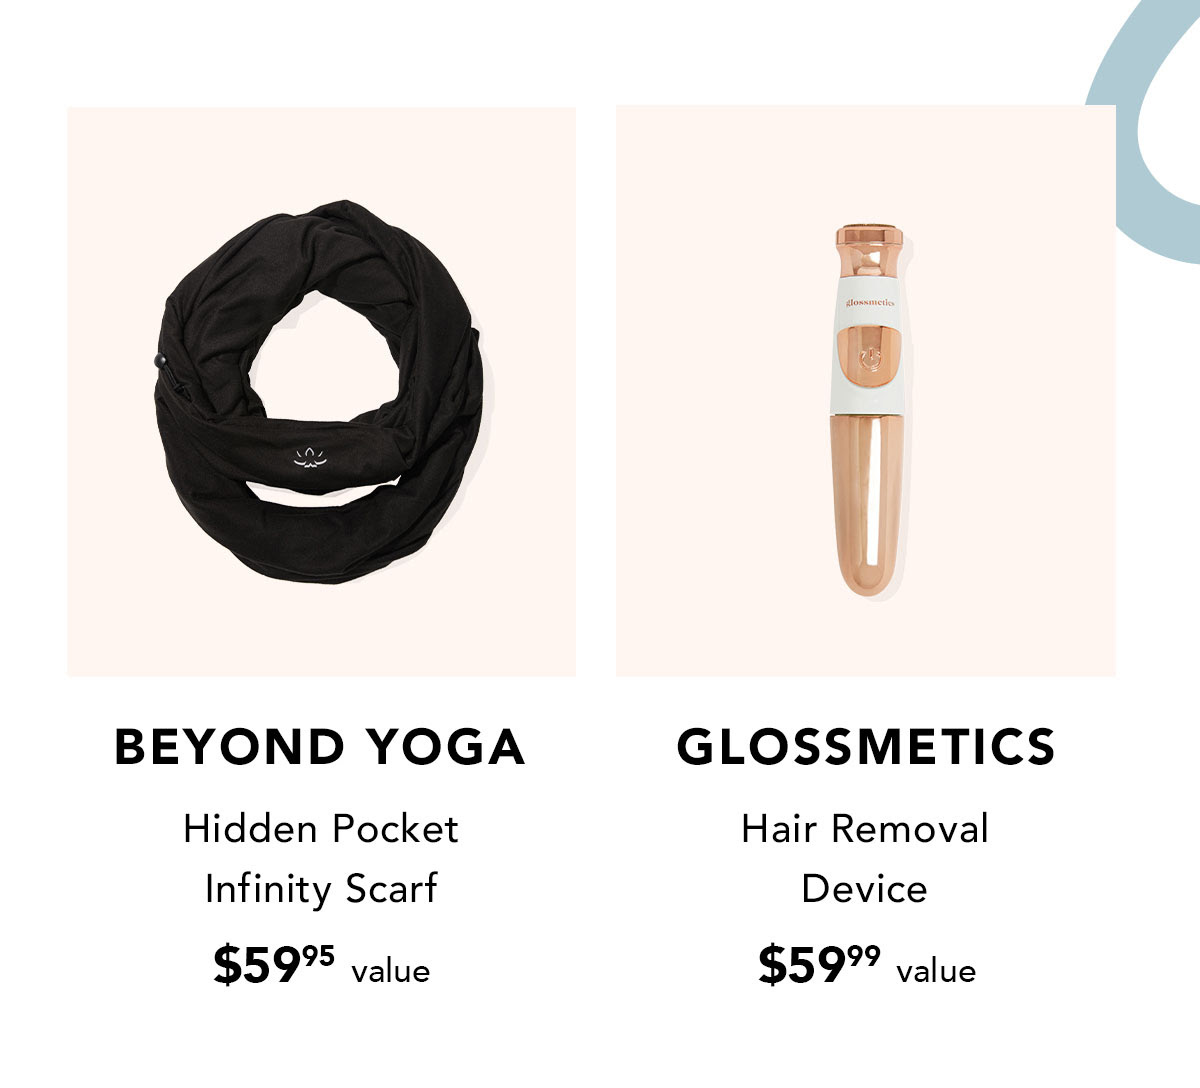 Beyond Yoga Hidden Pocket Infinity Scarf $59.95 value | Glossmetics Hair Removal Device $59.99 value